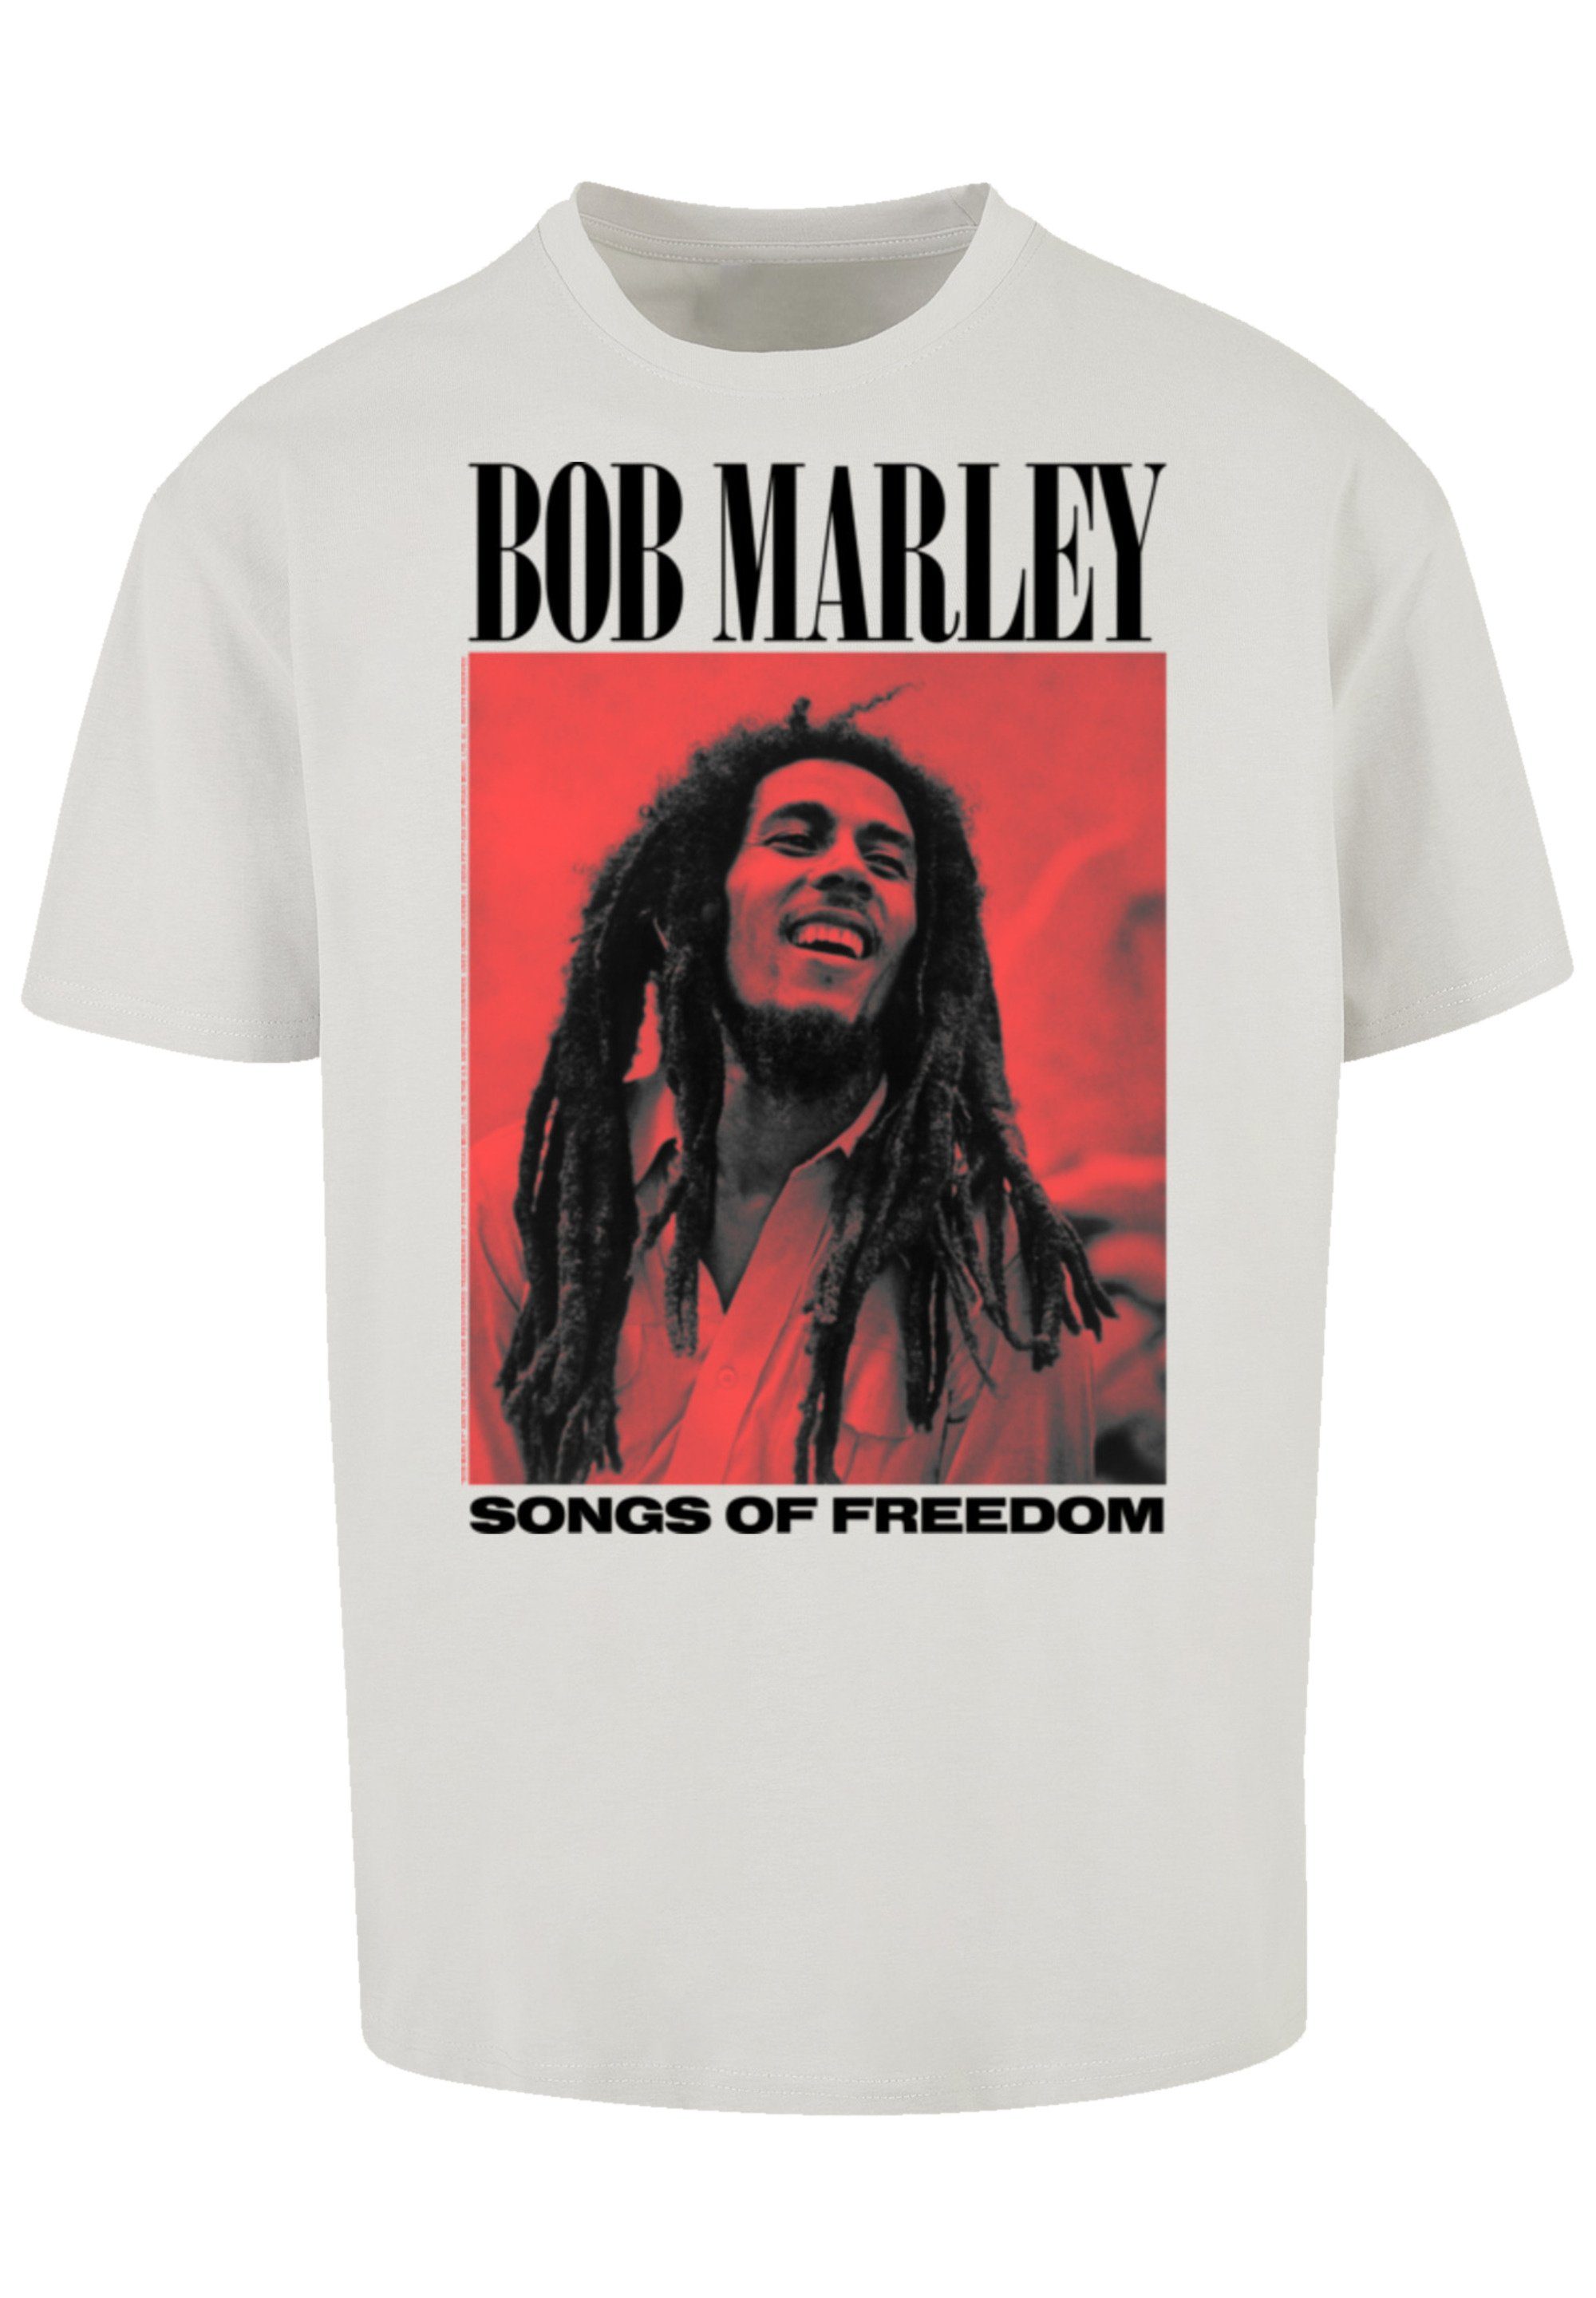 Bob Off Of Rock By Qualität, Marley F4NT4STIC Premium Music Songs Musik, Freedom Reggae lightasphalt T-Shirt